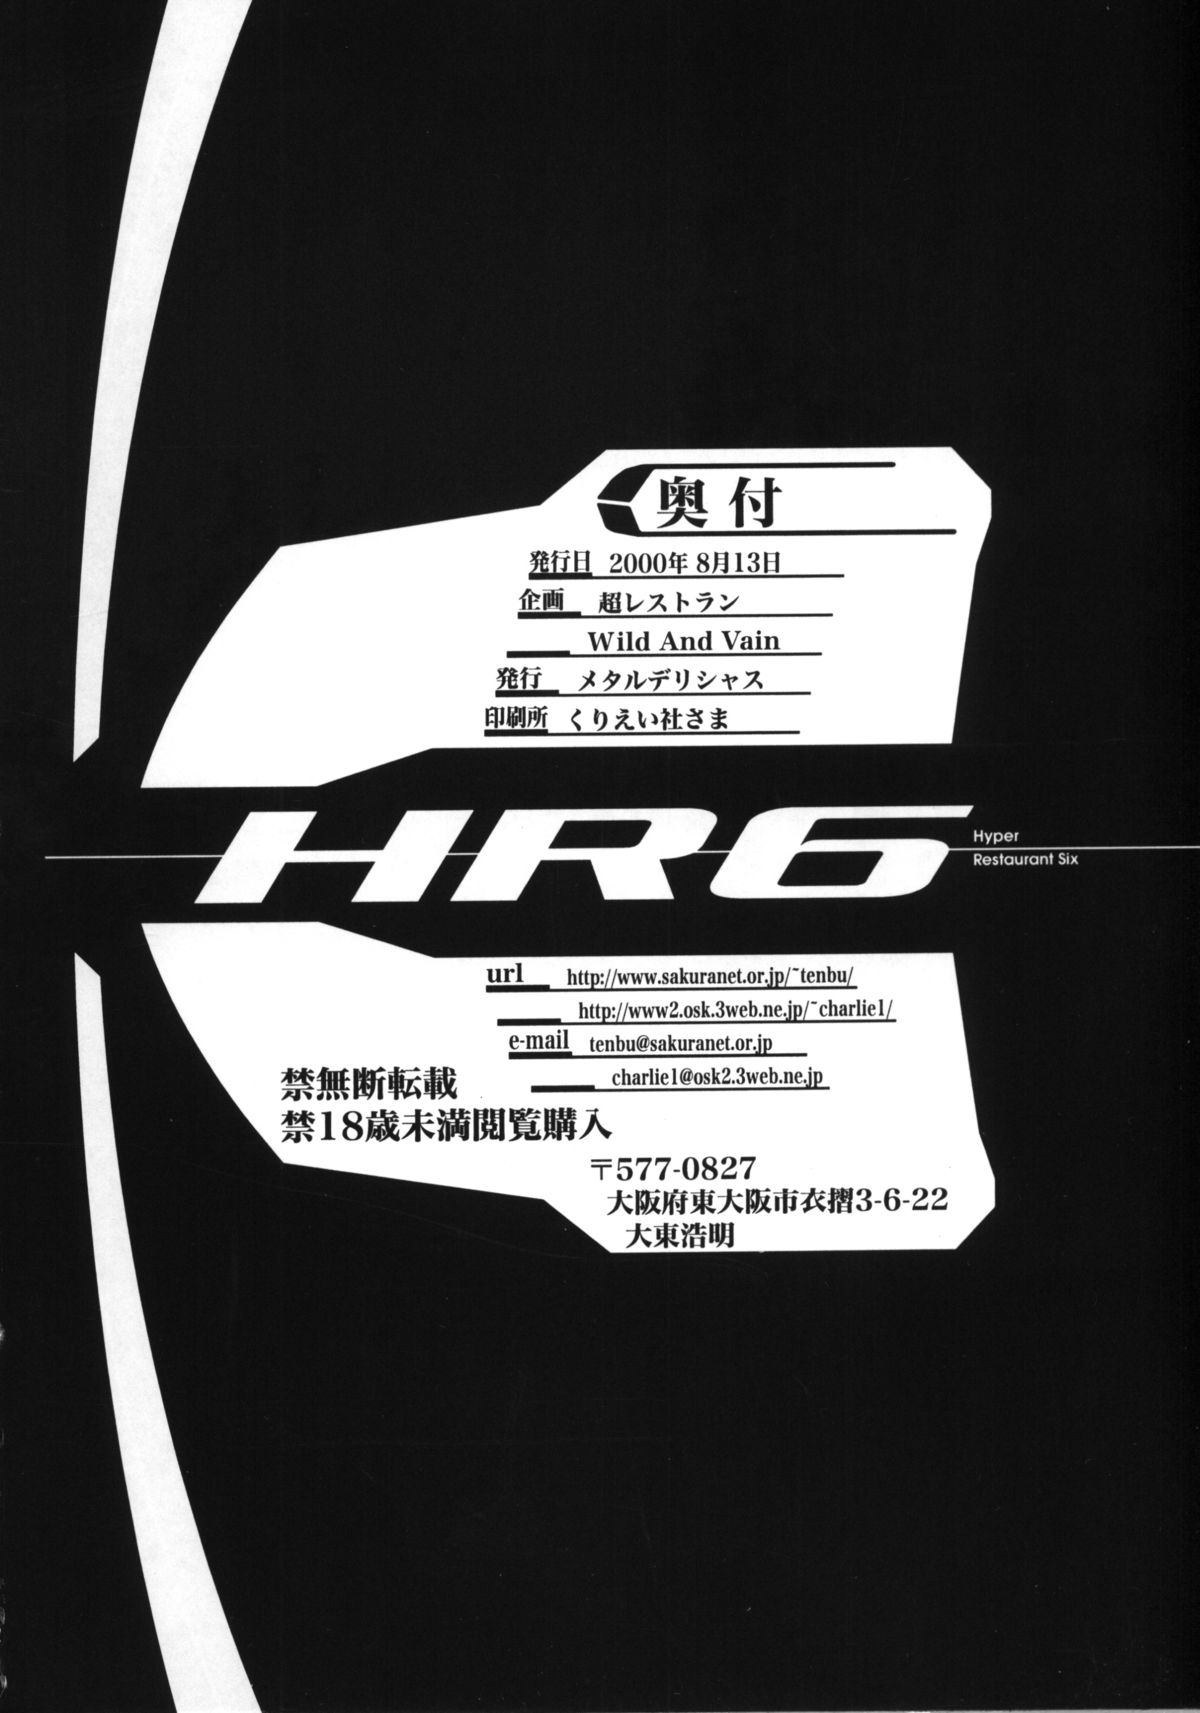 (C58) [メタルデリシャス (Charlie 1, 吉川かば夫 , 巴天舞)] HR6 | Hyper Restaurant 6 (ラブひな)